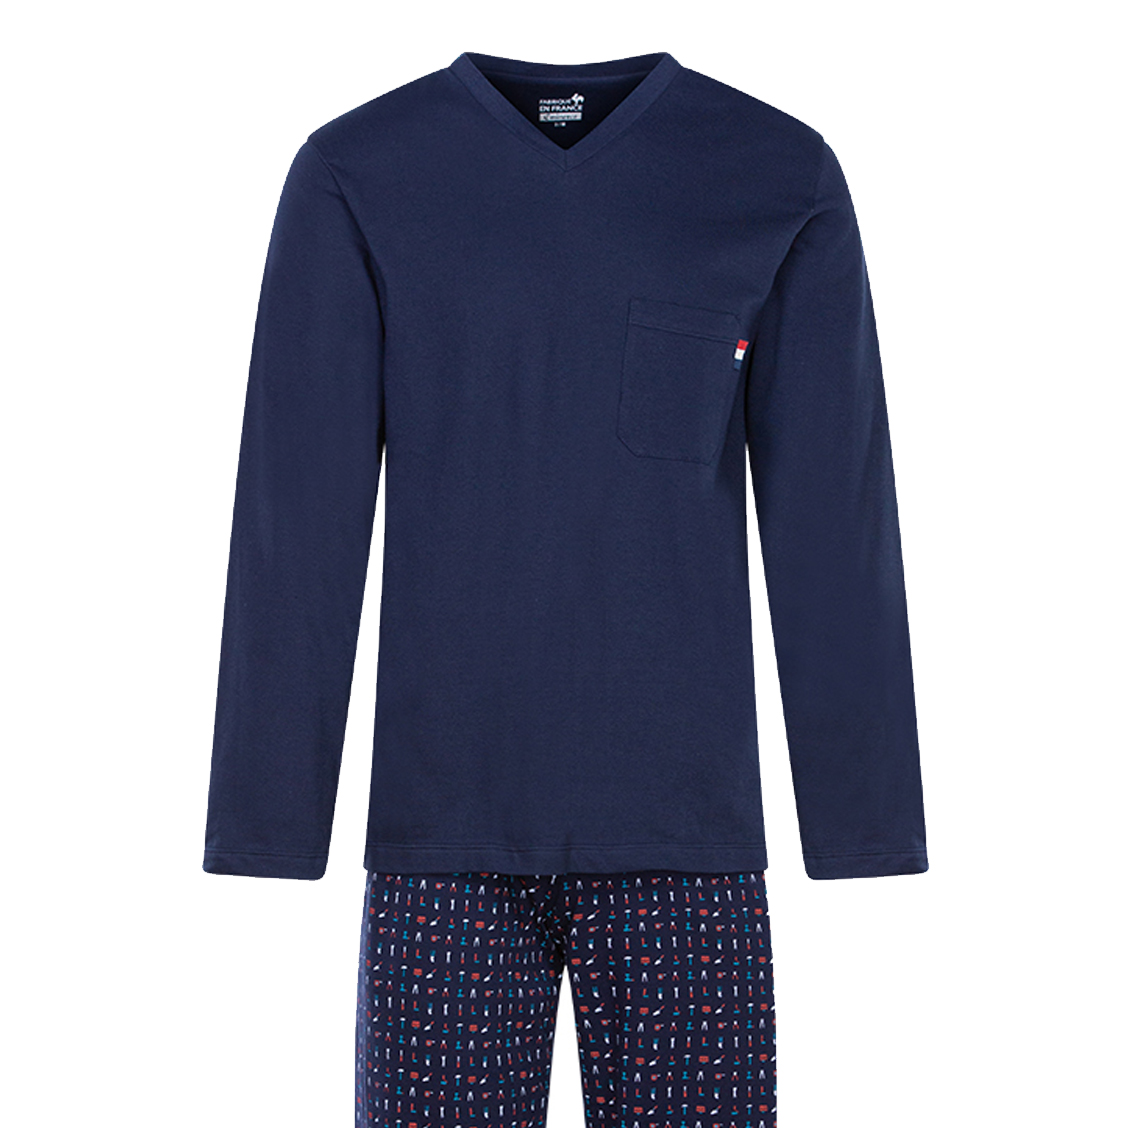 Pyjama long Eminence en coton : tee-shirt manches longues bleu marine et pantalon bleu marine à micr